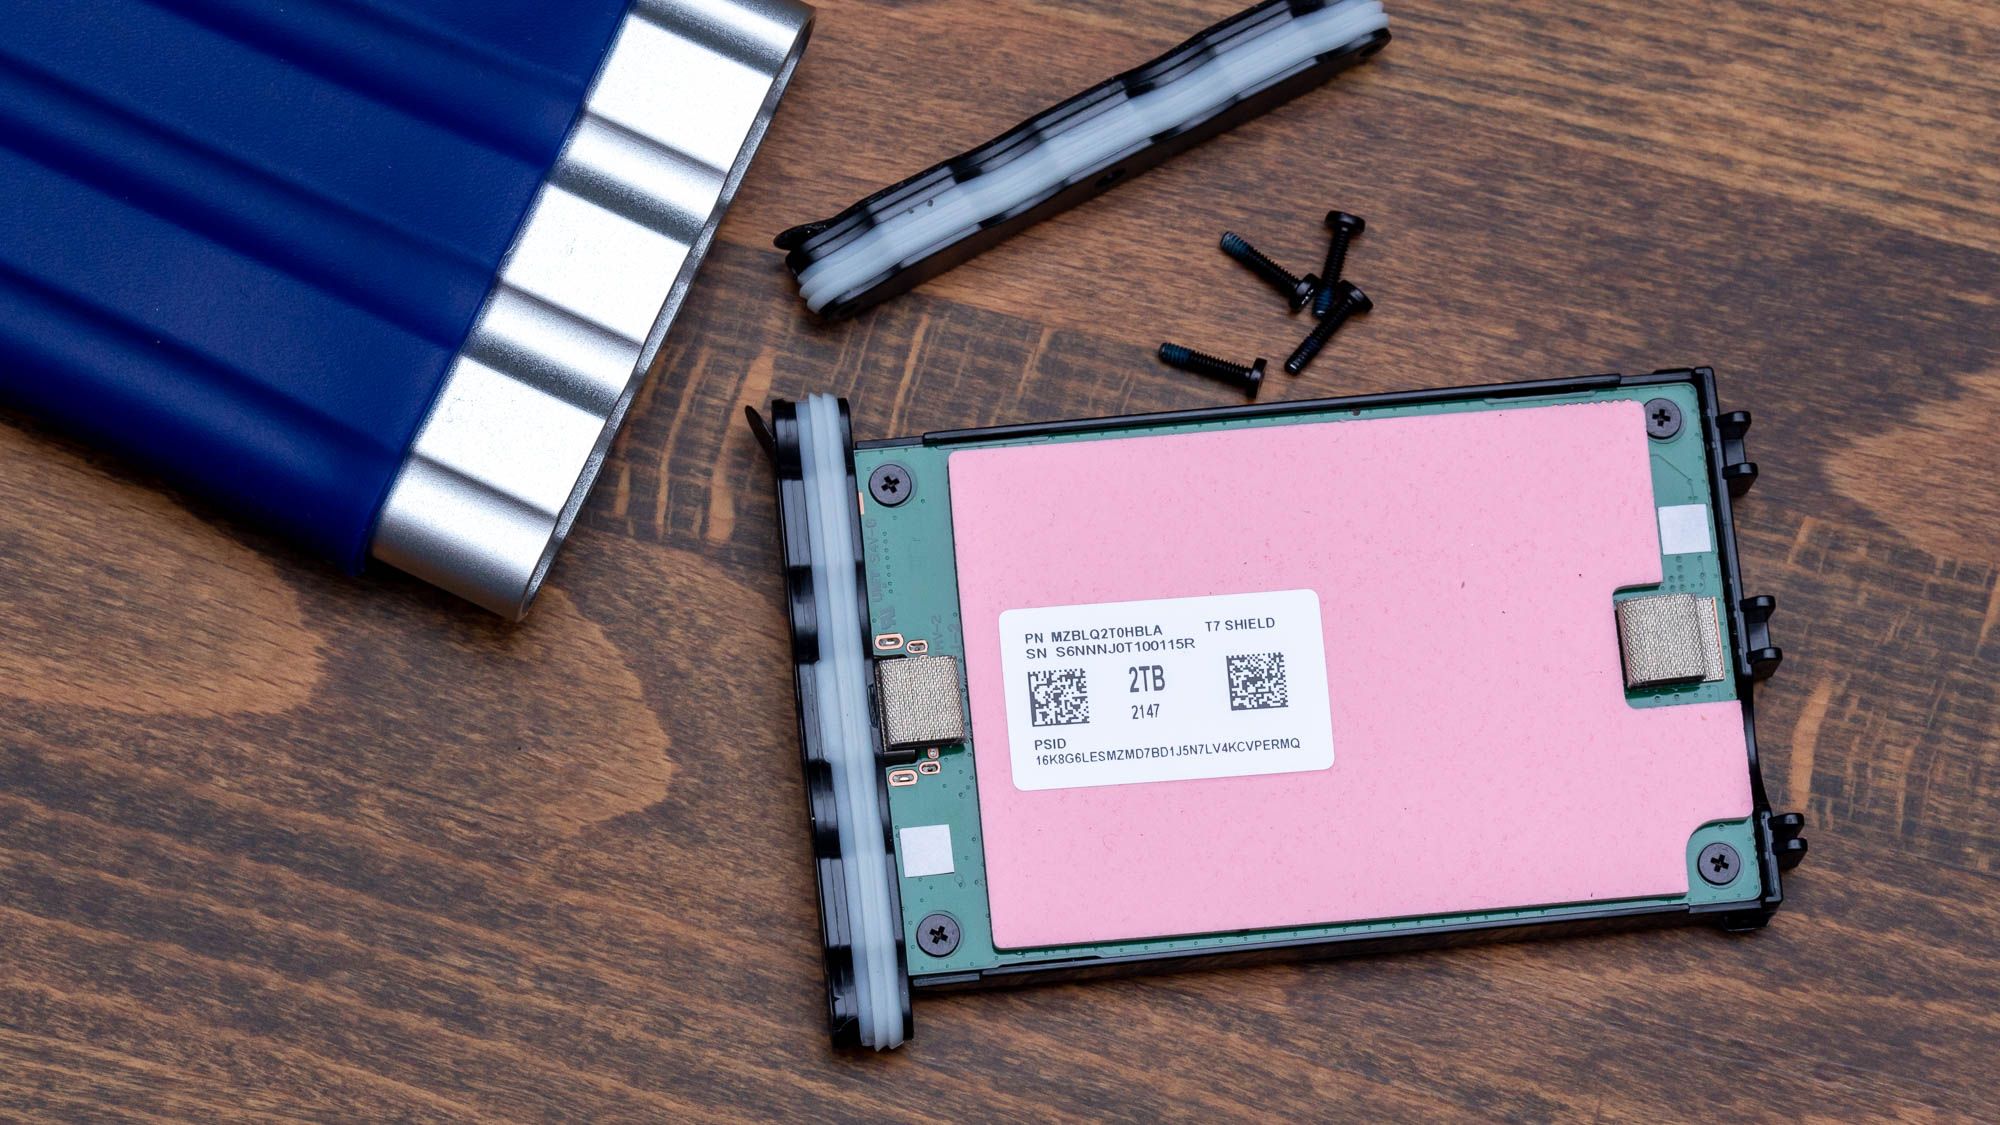 SSD portátil Samsung T7 Shield de 2 TB